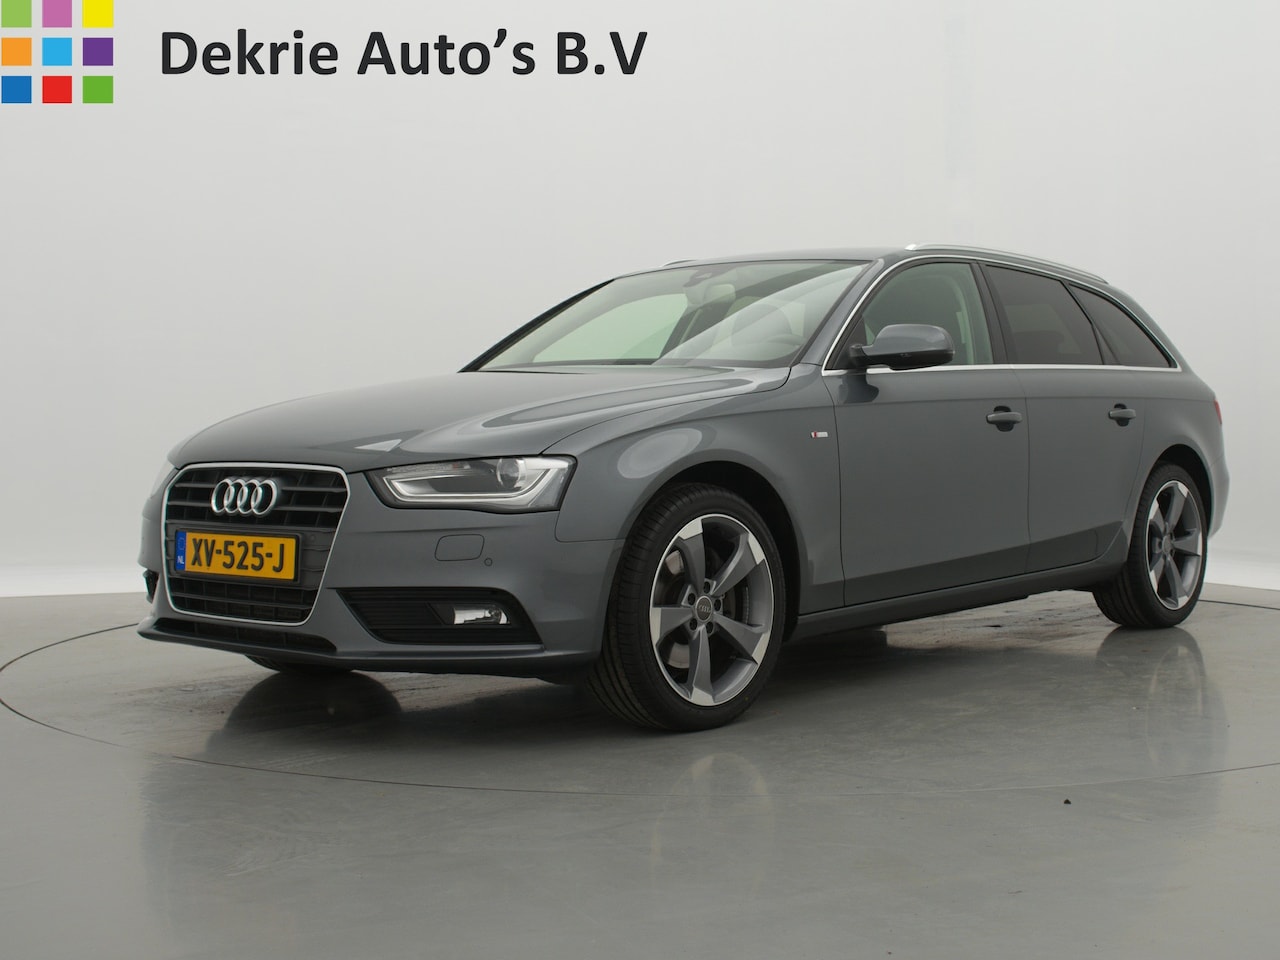 Audi A4 Avant 3.0 TDI AUTOMAAT Business Edition S-LINE / NAVI / ADAP. CRUISE CTR. / AIRCO-ECC PDC / *A 2014 Diesel - Occasion te koop op AutoWereld.nl